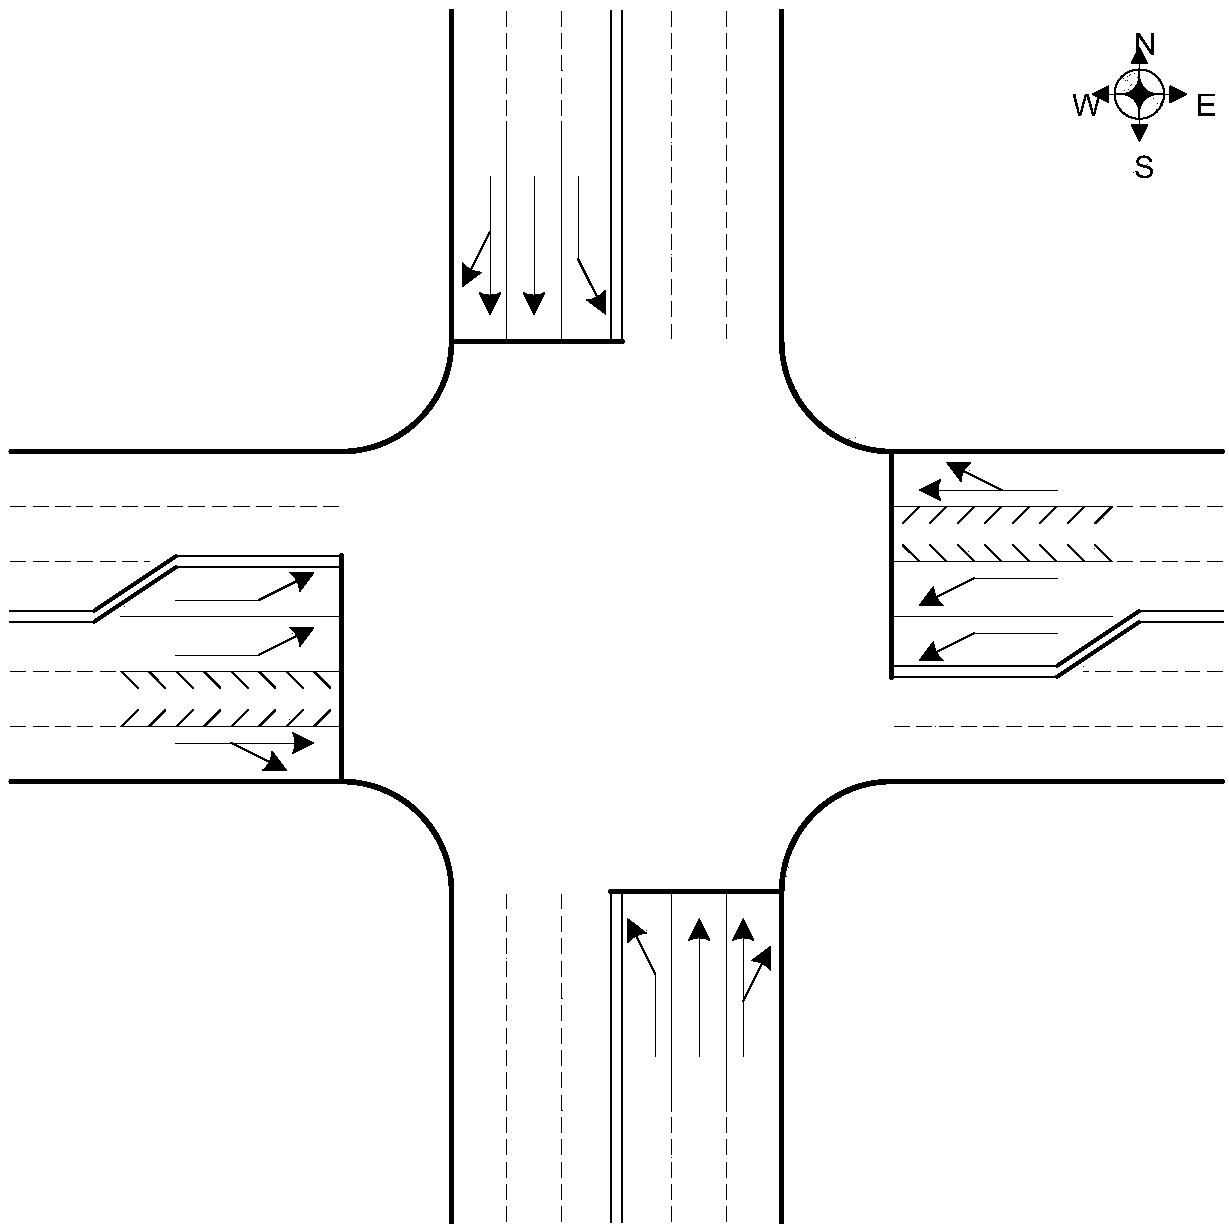 Reversible lane control method at intersection under influence of left-turn short lane